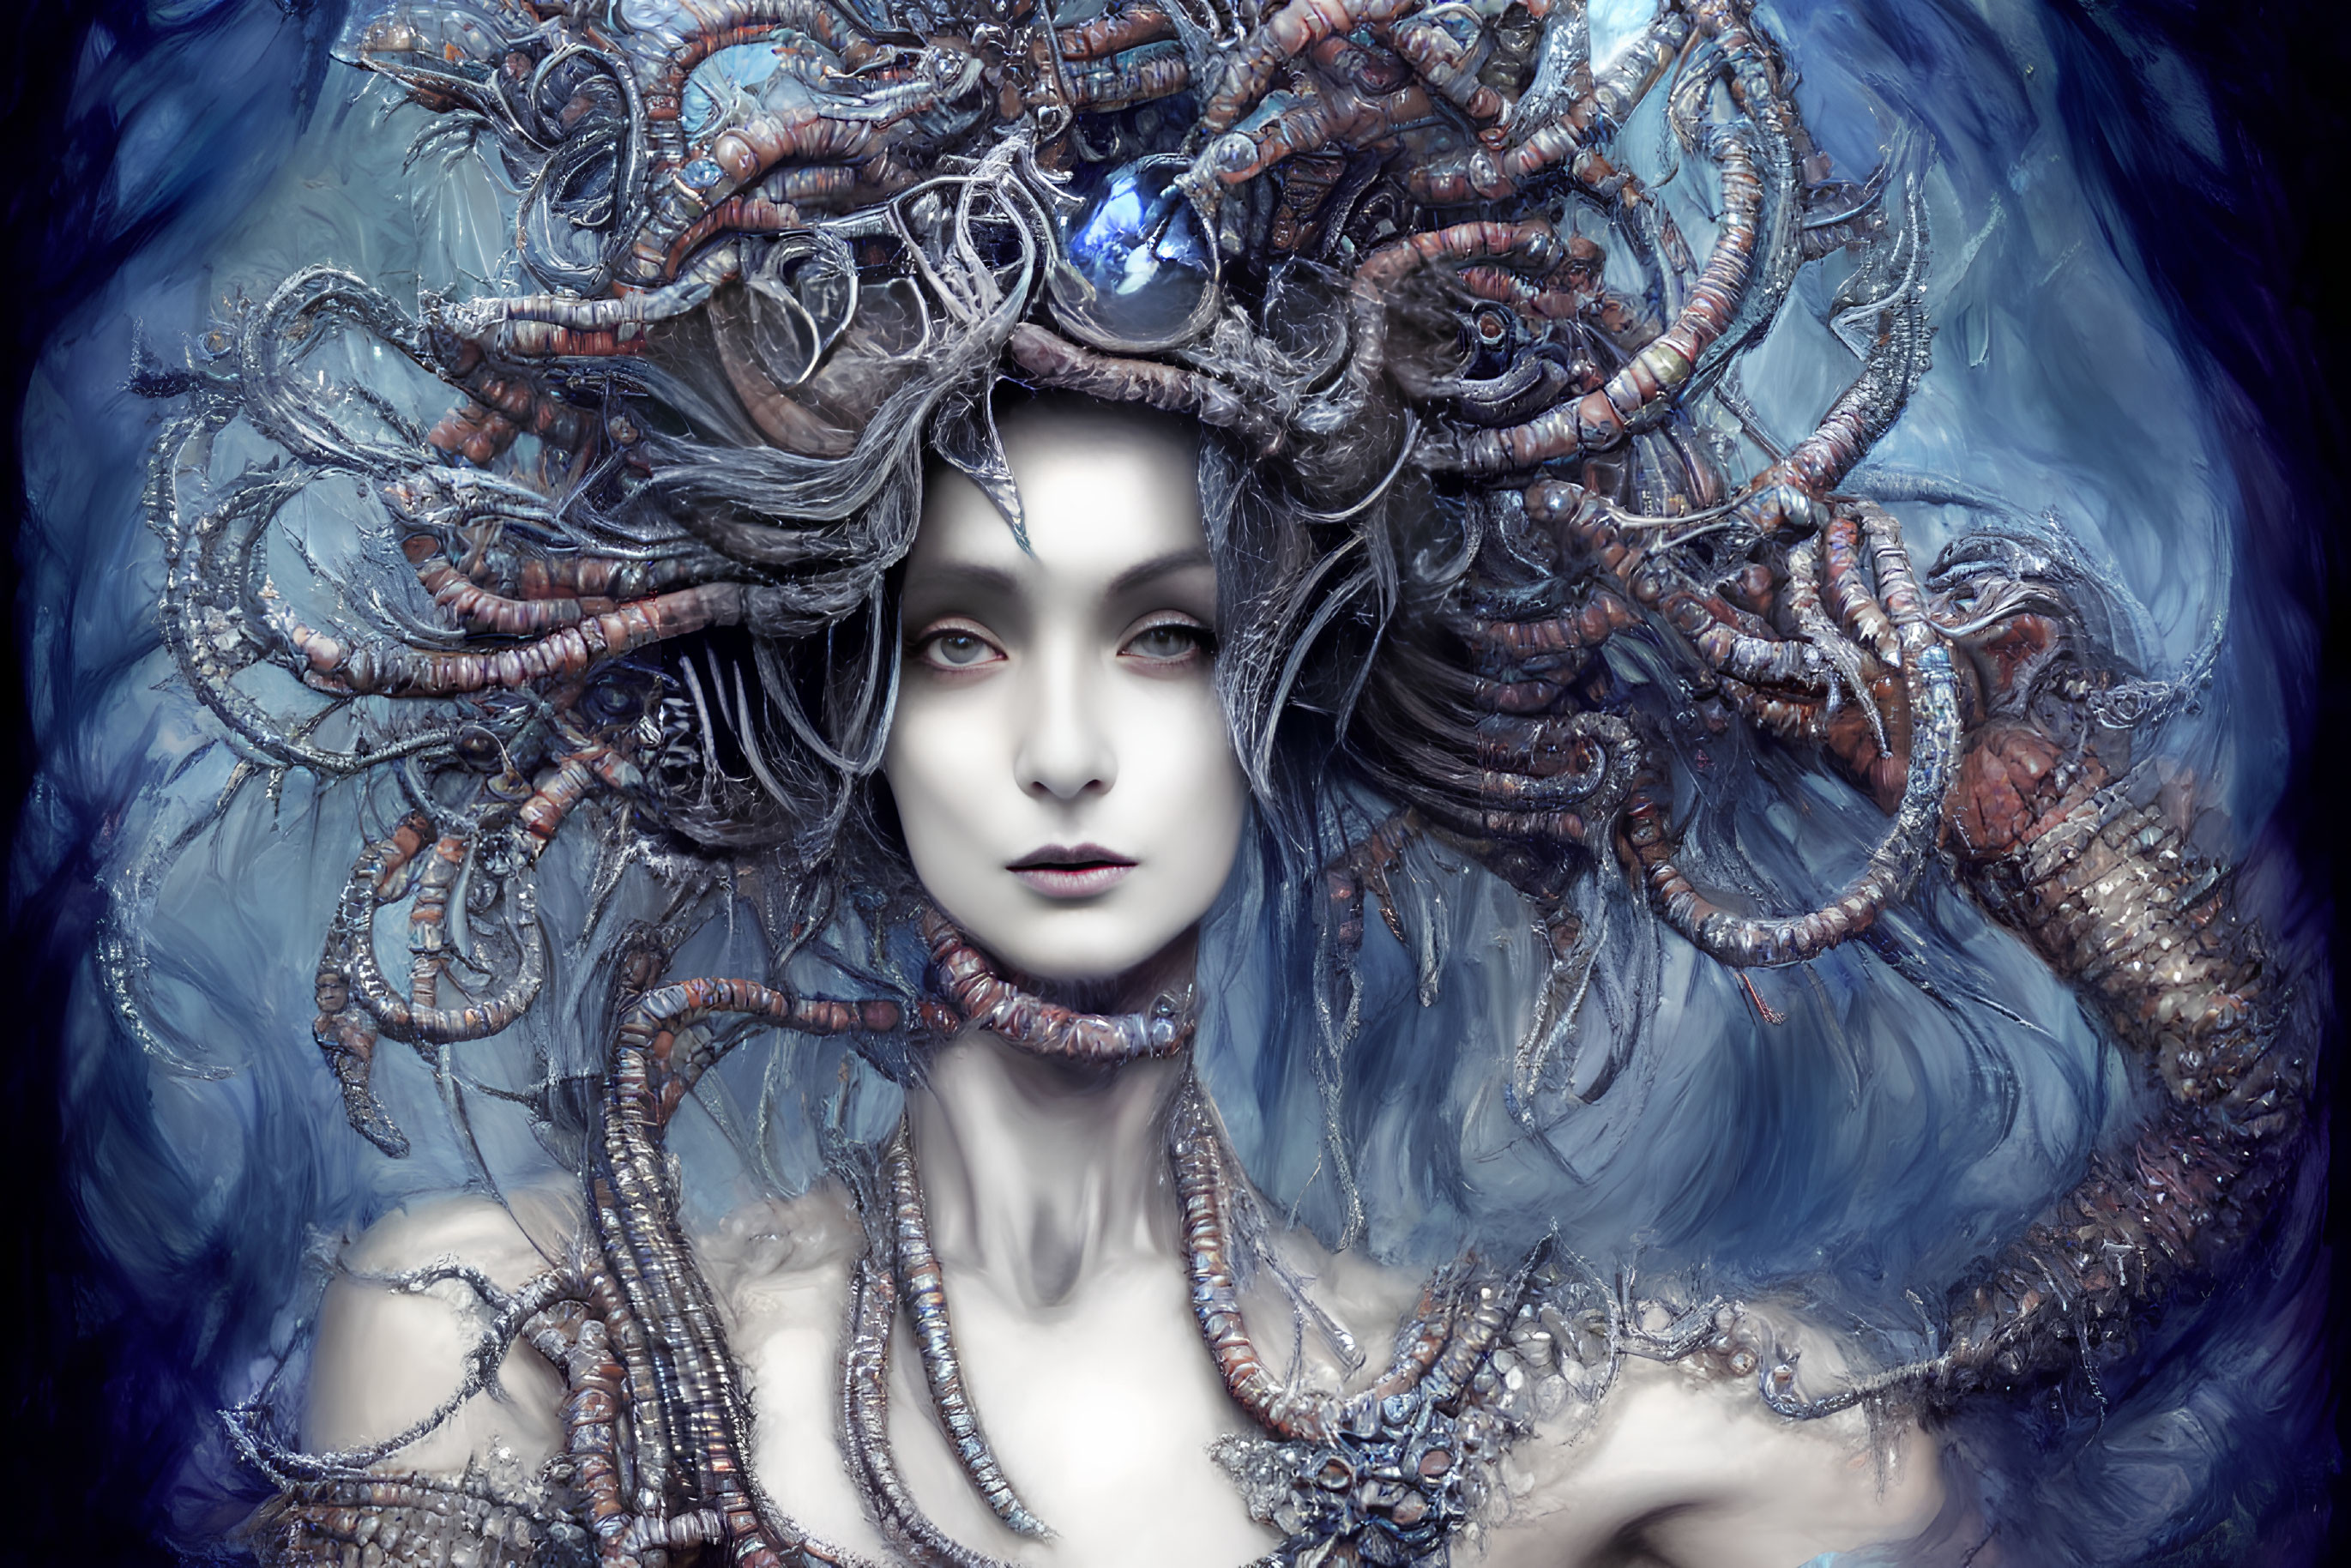 Pale-skinned female figure with serpentine headdress on blue background